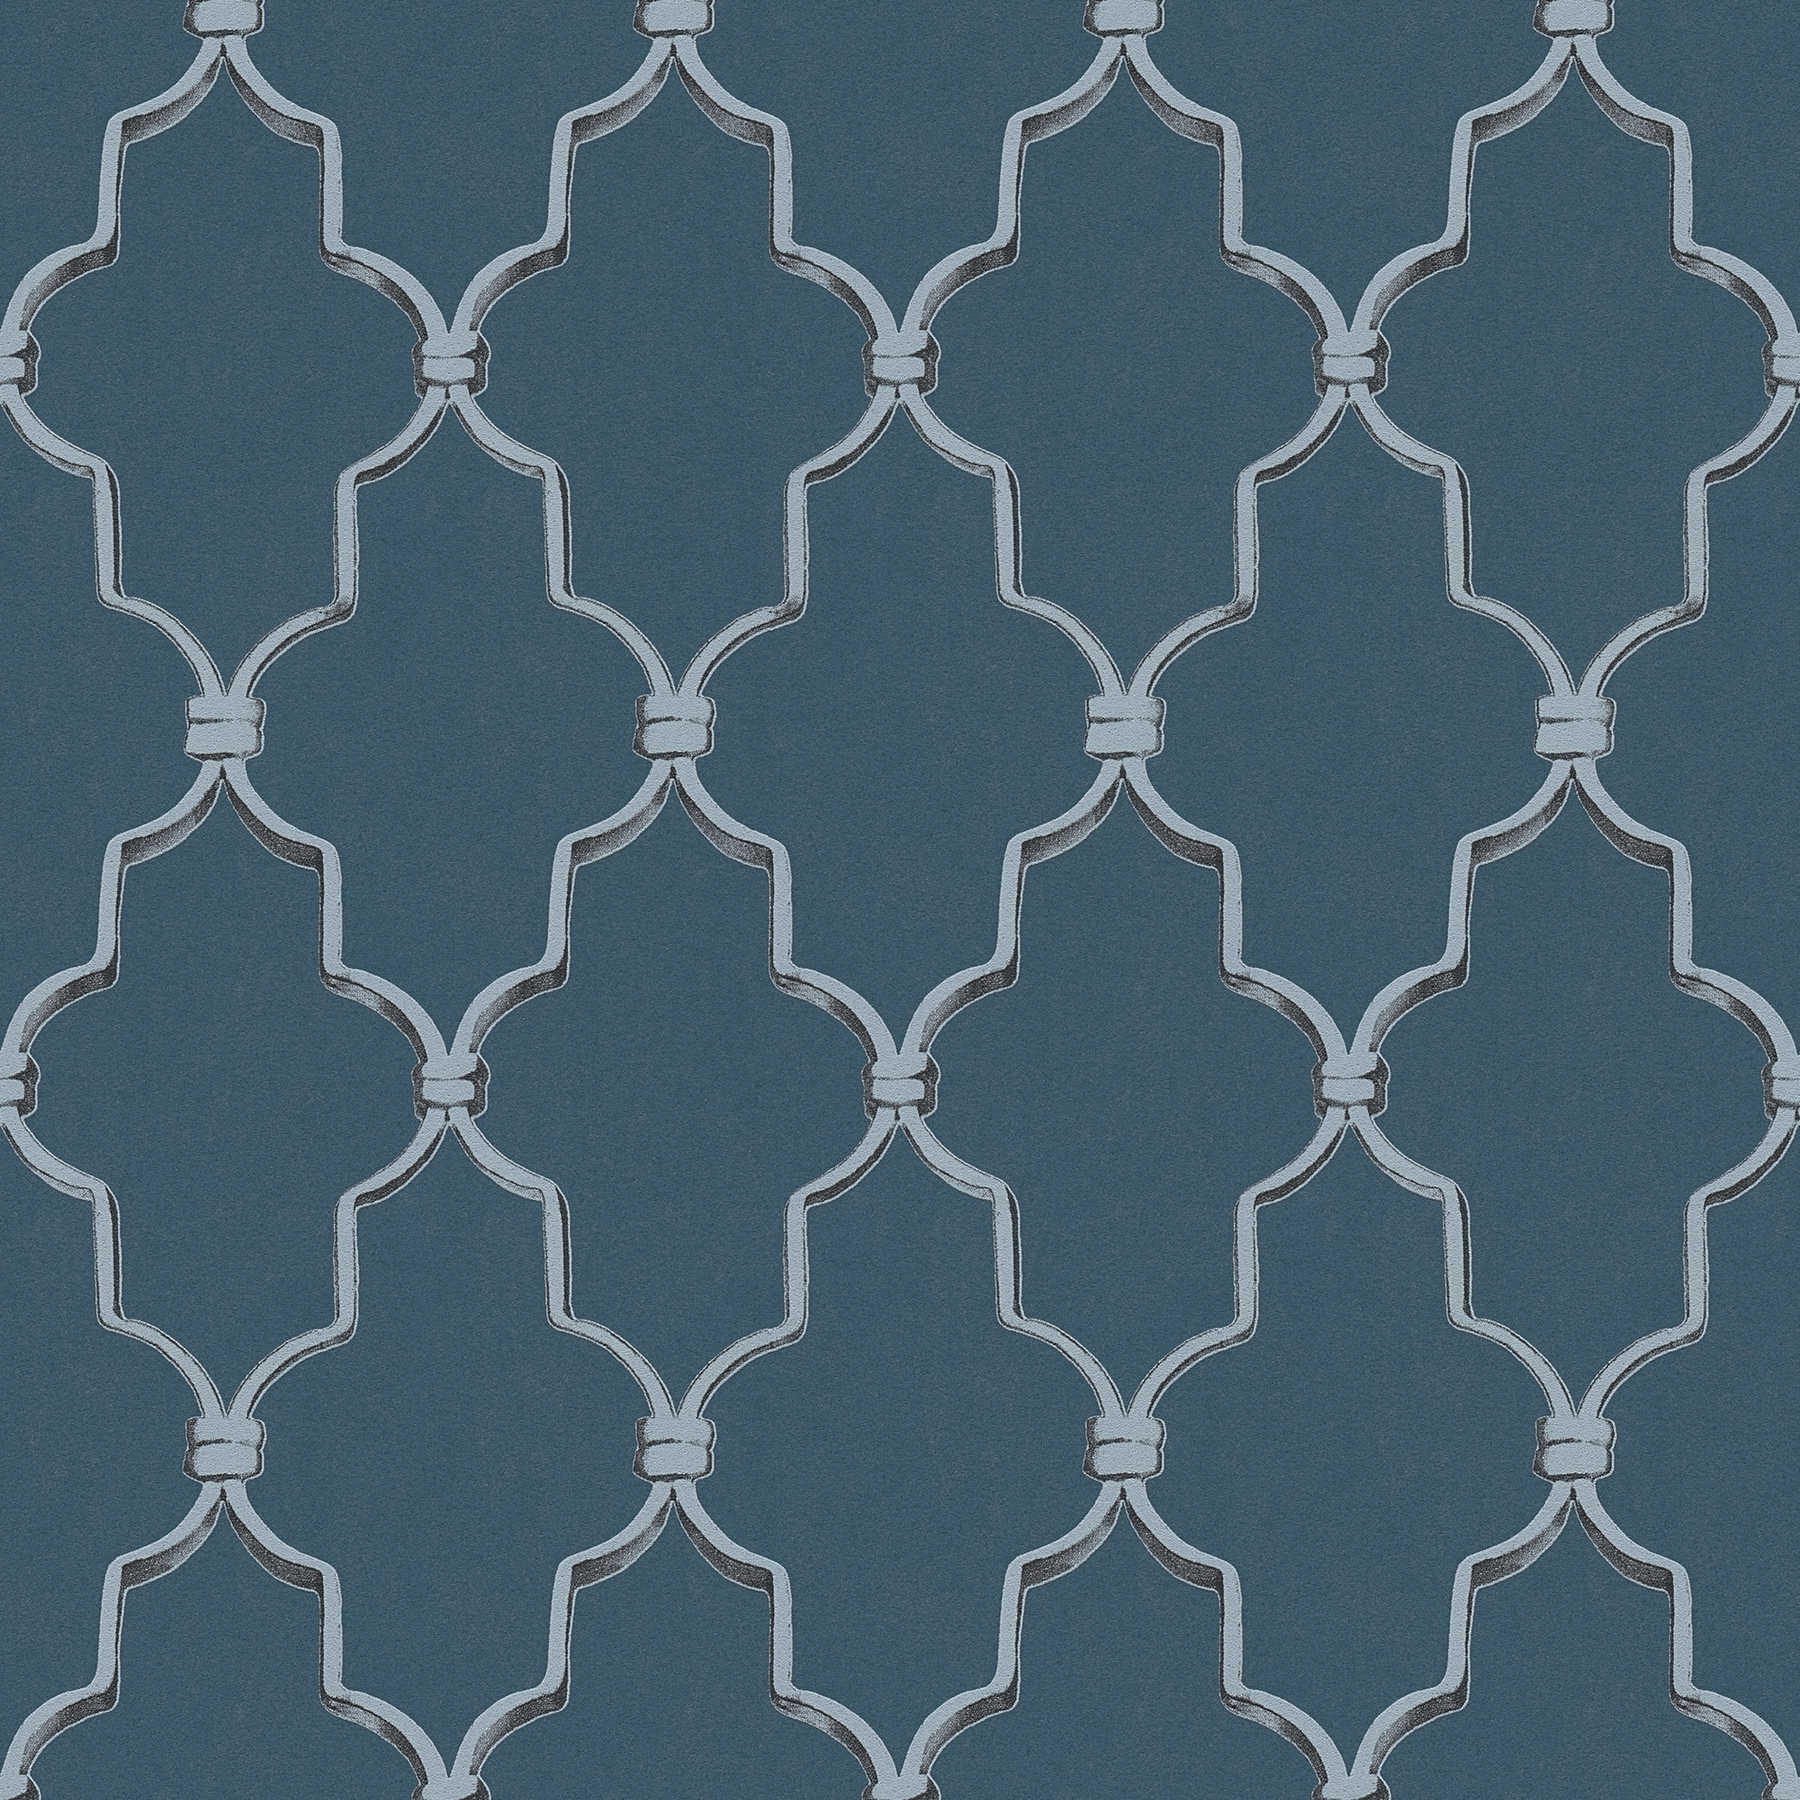 Art Deco Tapete 3D Muster & Metallic-Effekt – Blau, Grau
